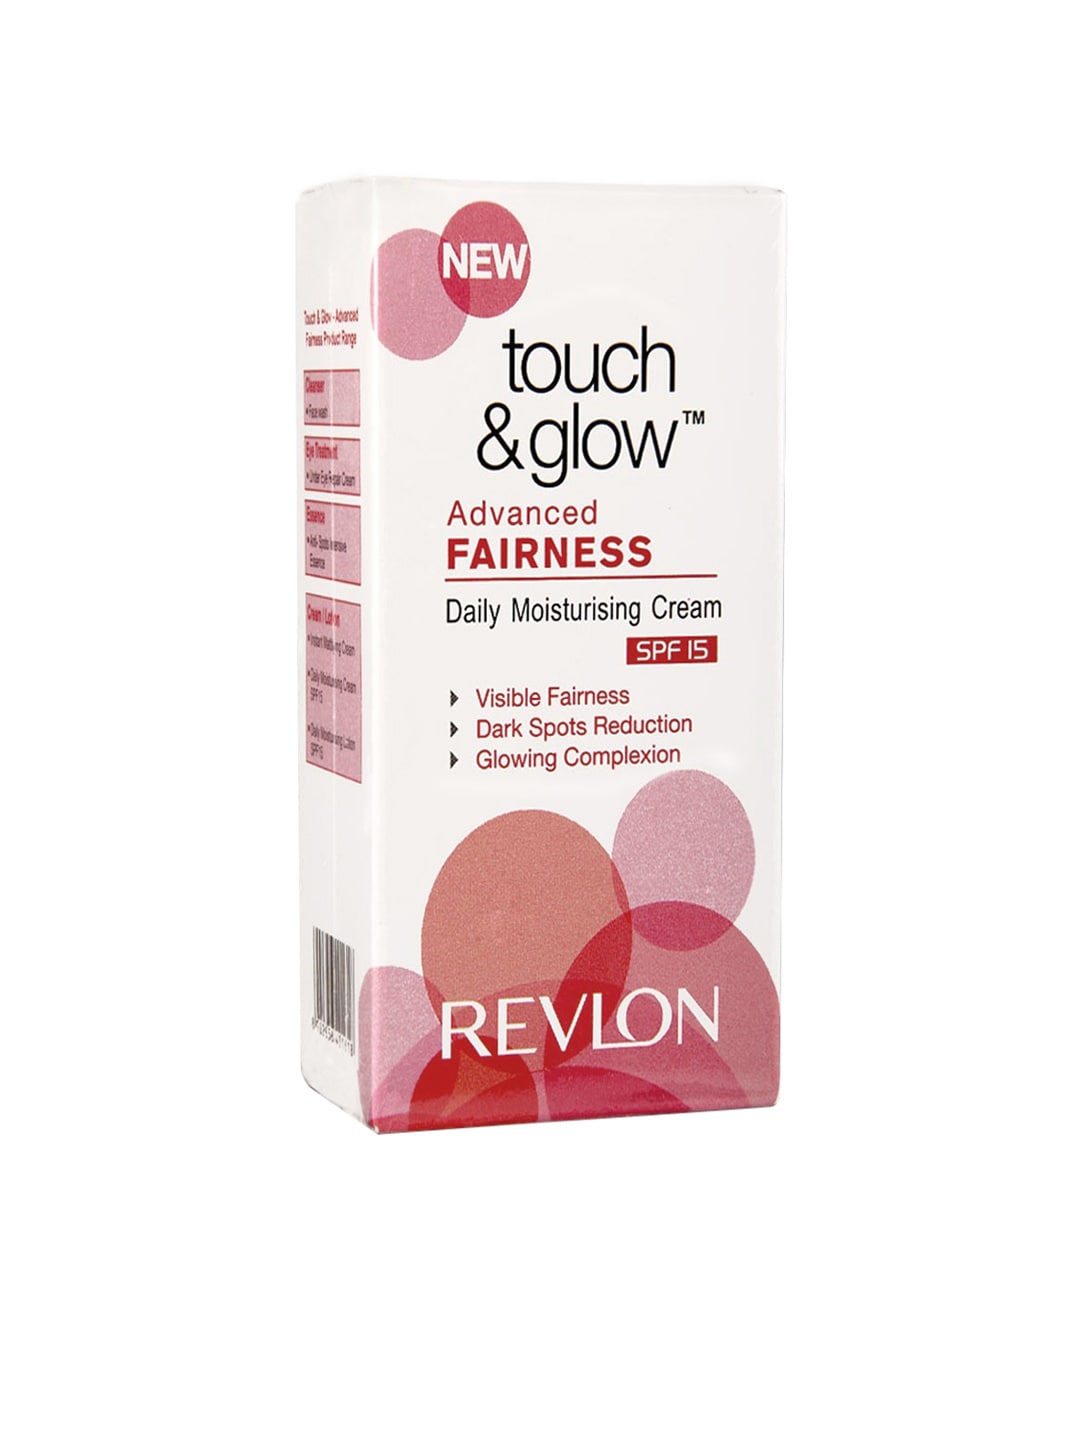 Revlon Touch & Glow Advanced Fairness Daily Moisturising Lotion SPF 15